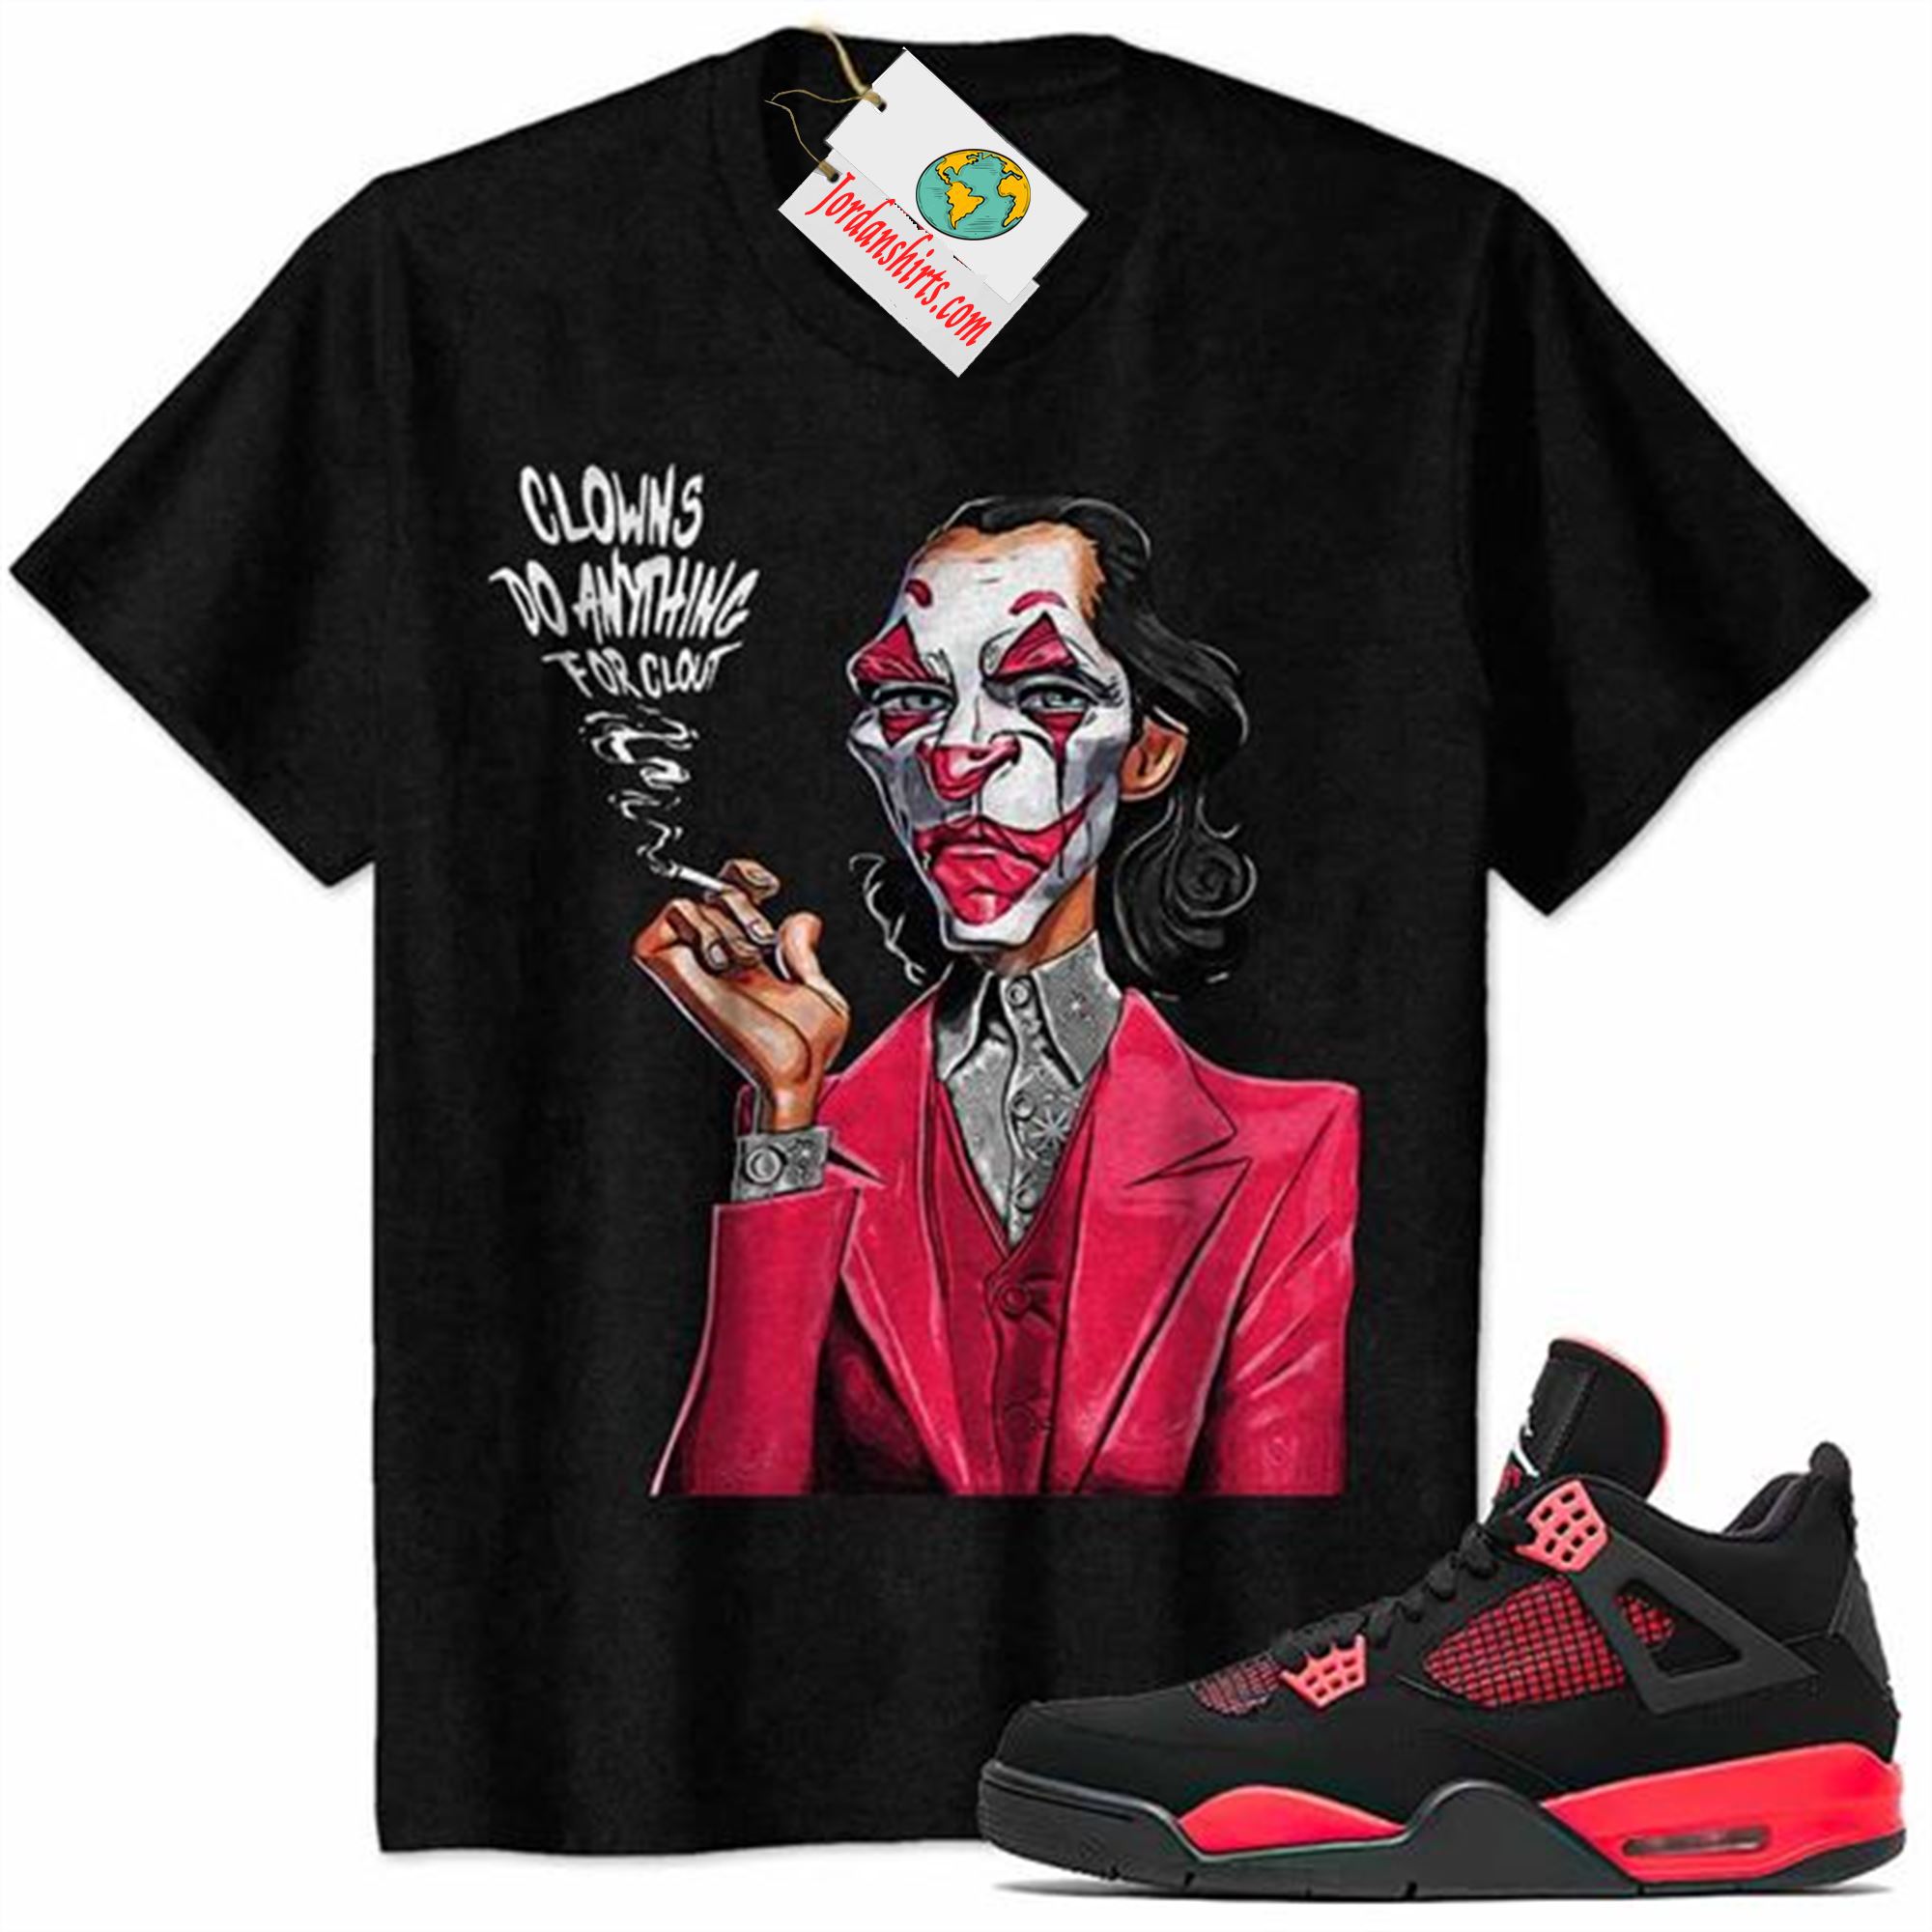 Jordan 4 Shirt, Clowns Do Any Thing For Clout Black Air Jordan 4 Red Thunder 4s Plus Size Up To 5xl